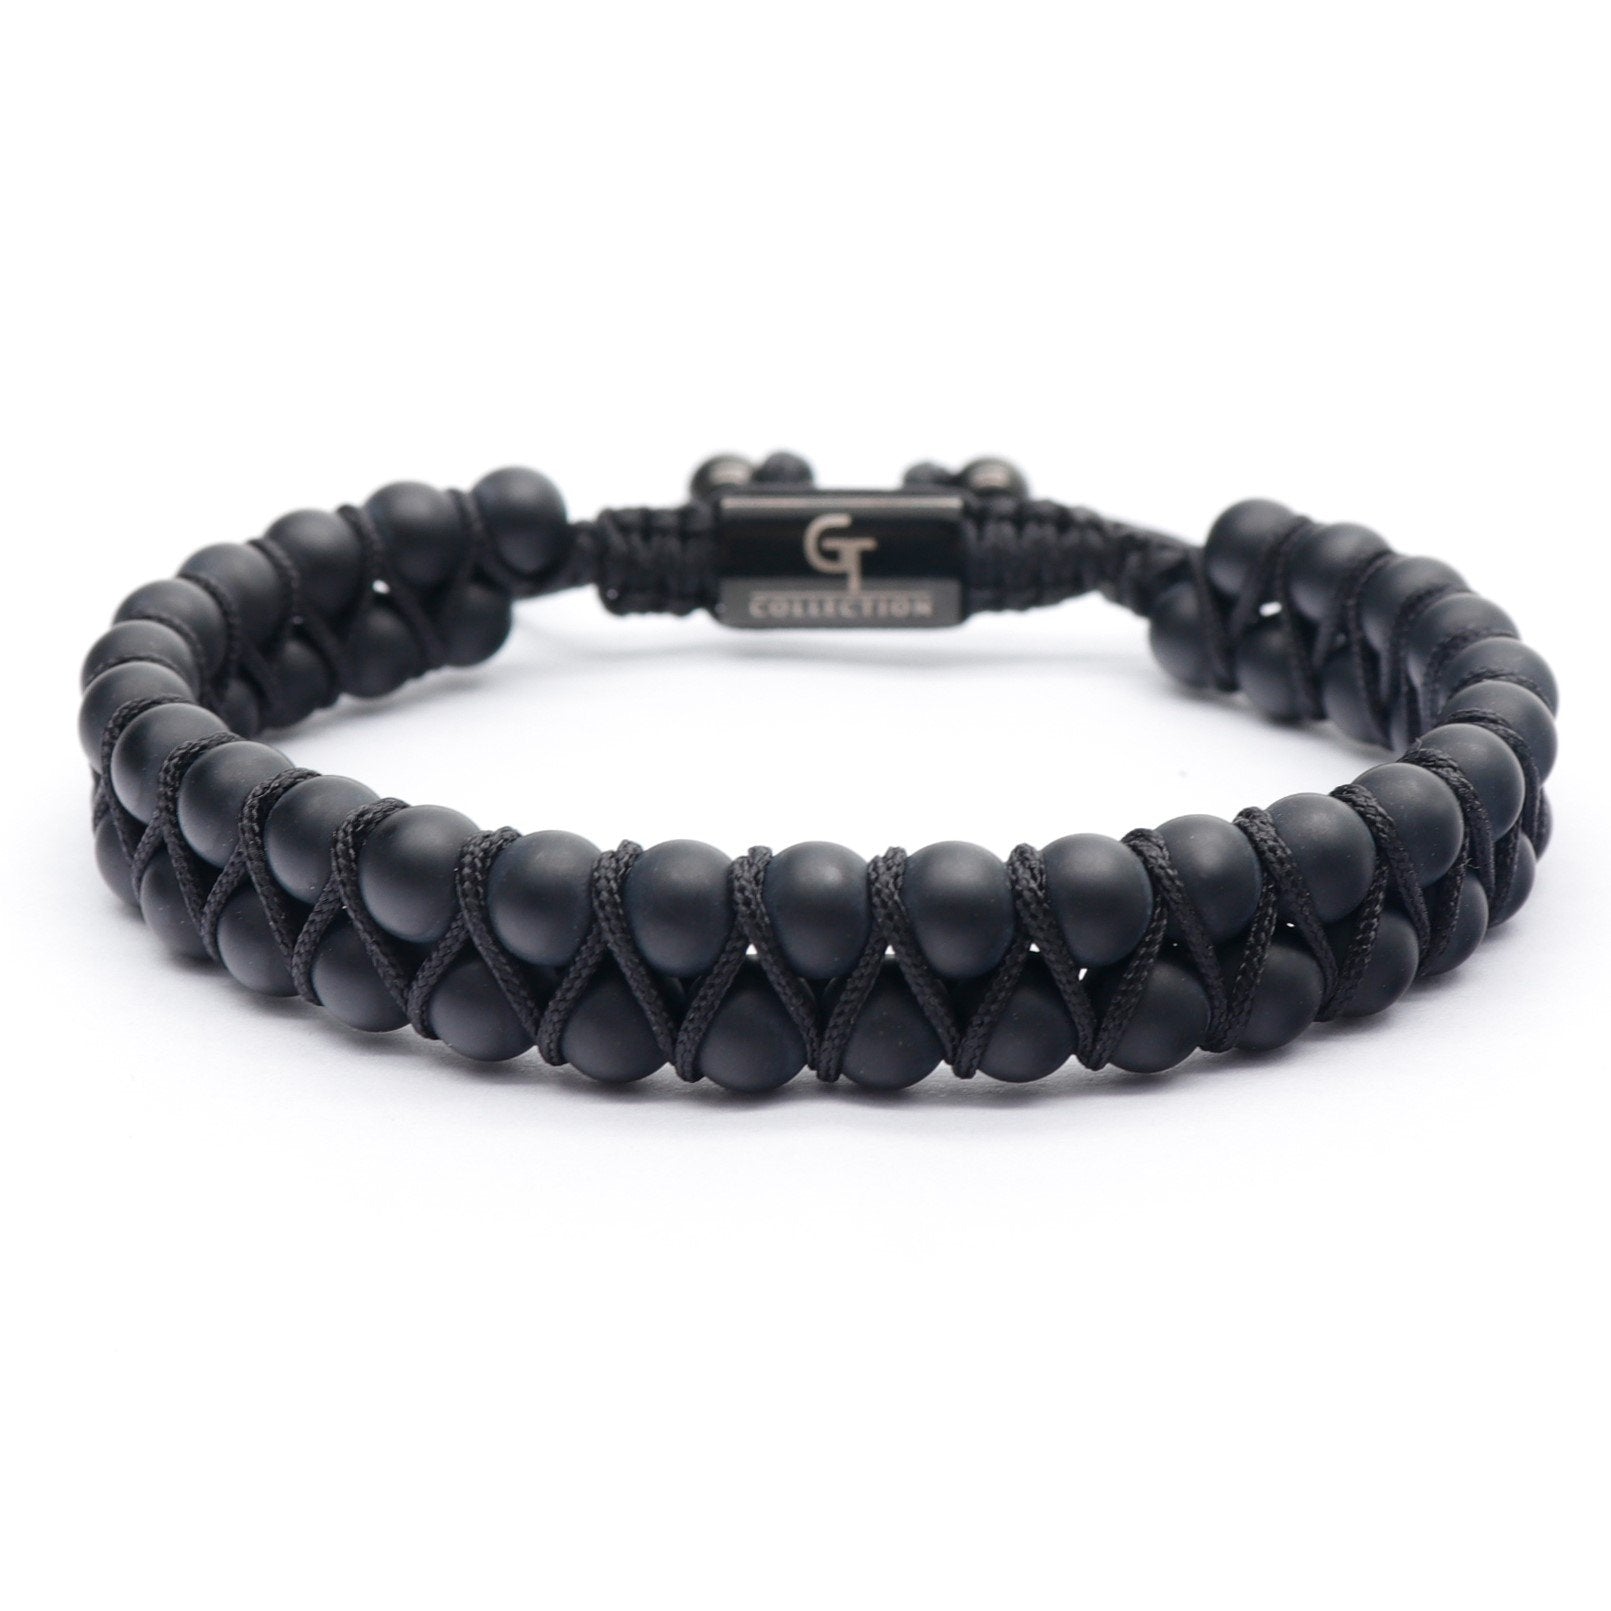 Buy Men's Bracelet, Black Beads Bracelet, Men's Jewelry, Made in Greece, by  Christina Christi Jewels. Online in India - Etsy